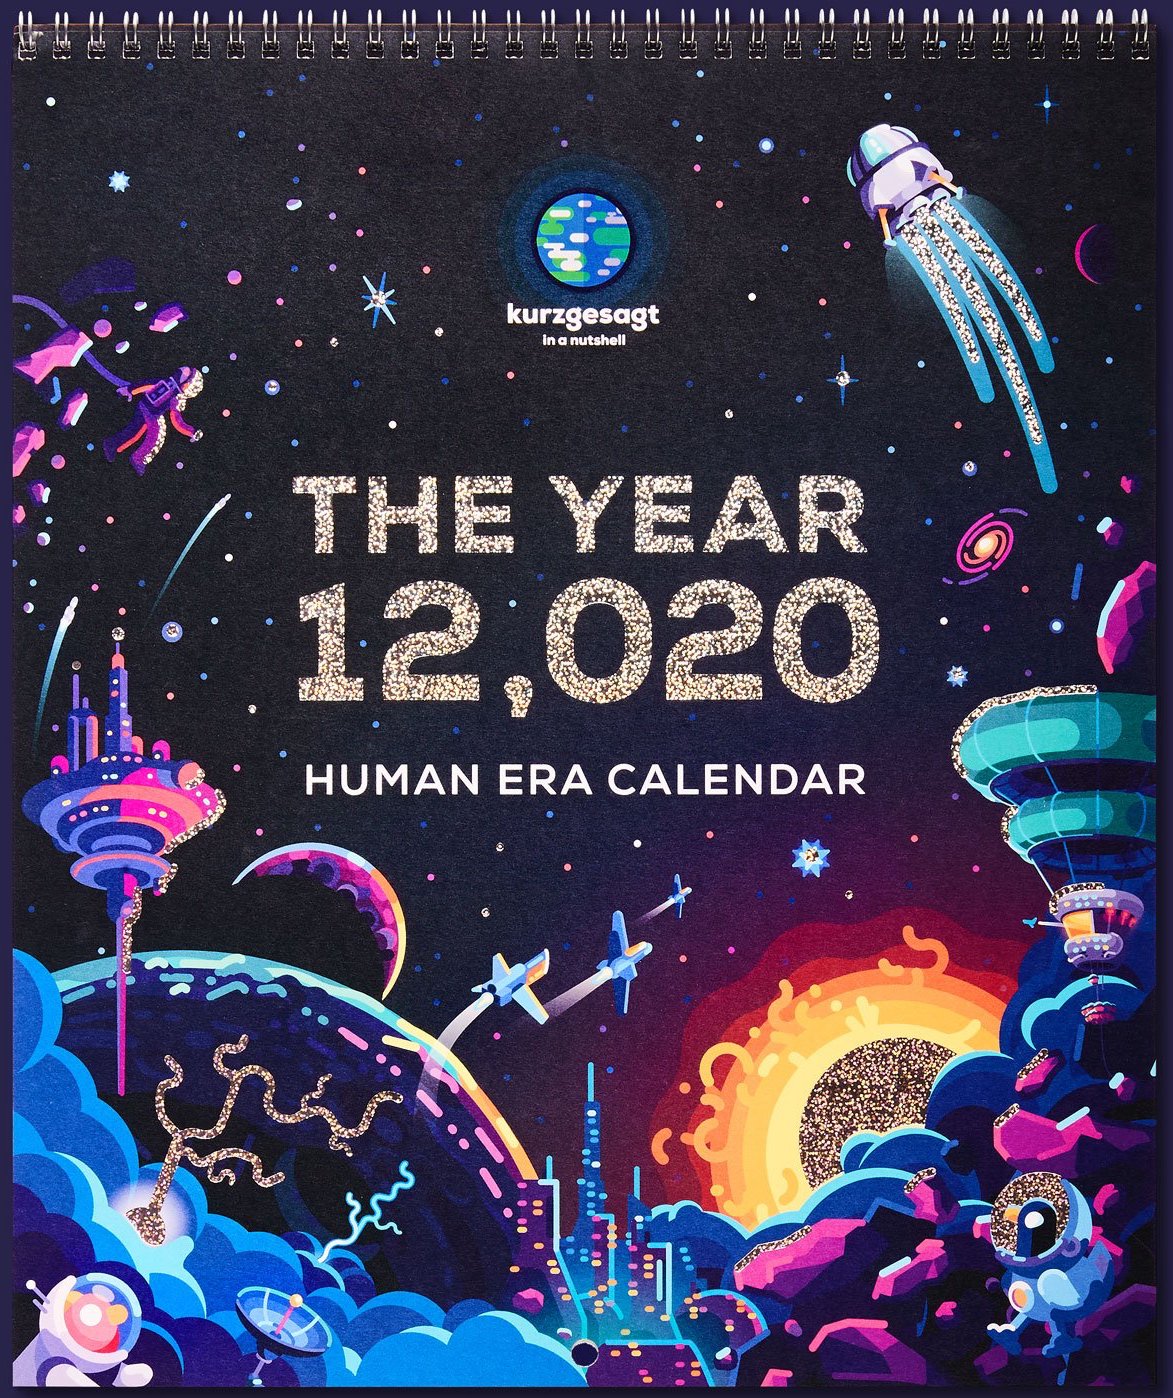 The 12020 Human Era Calendar